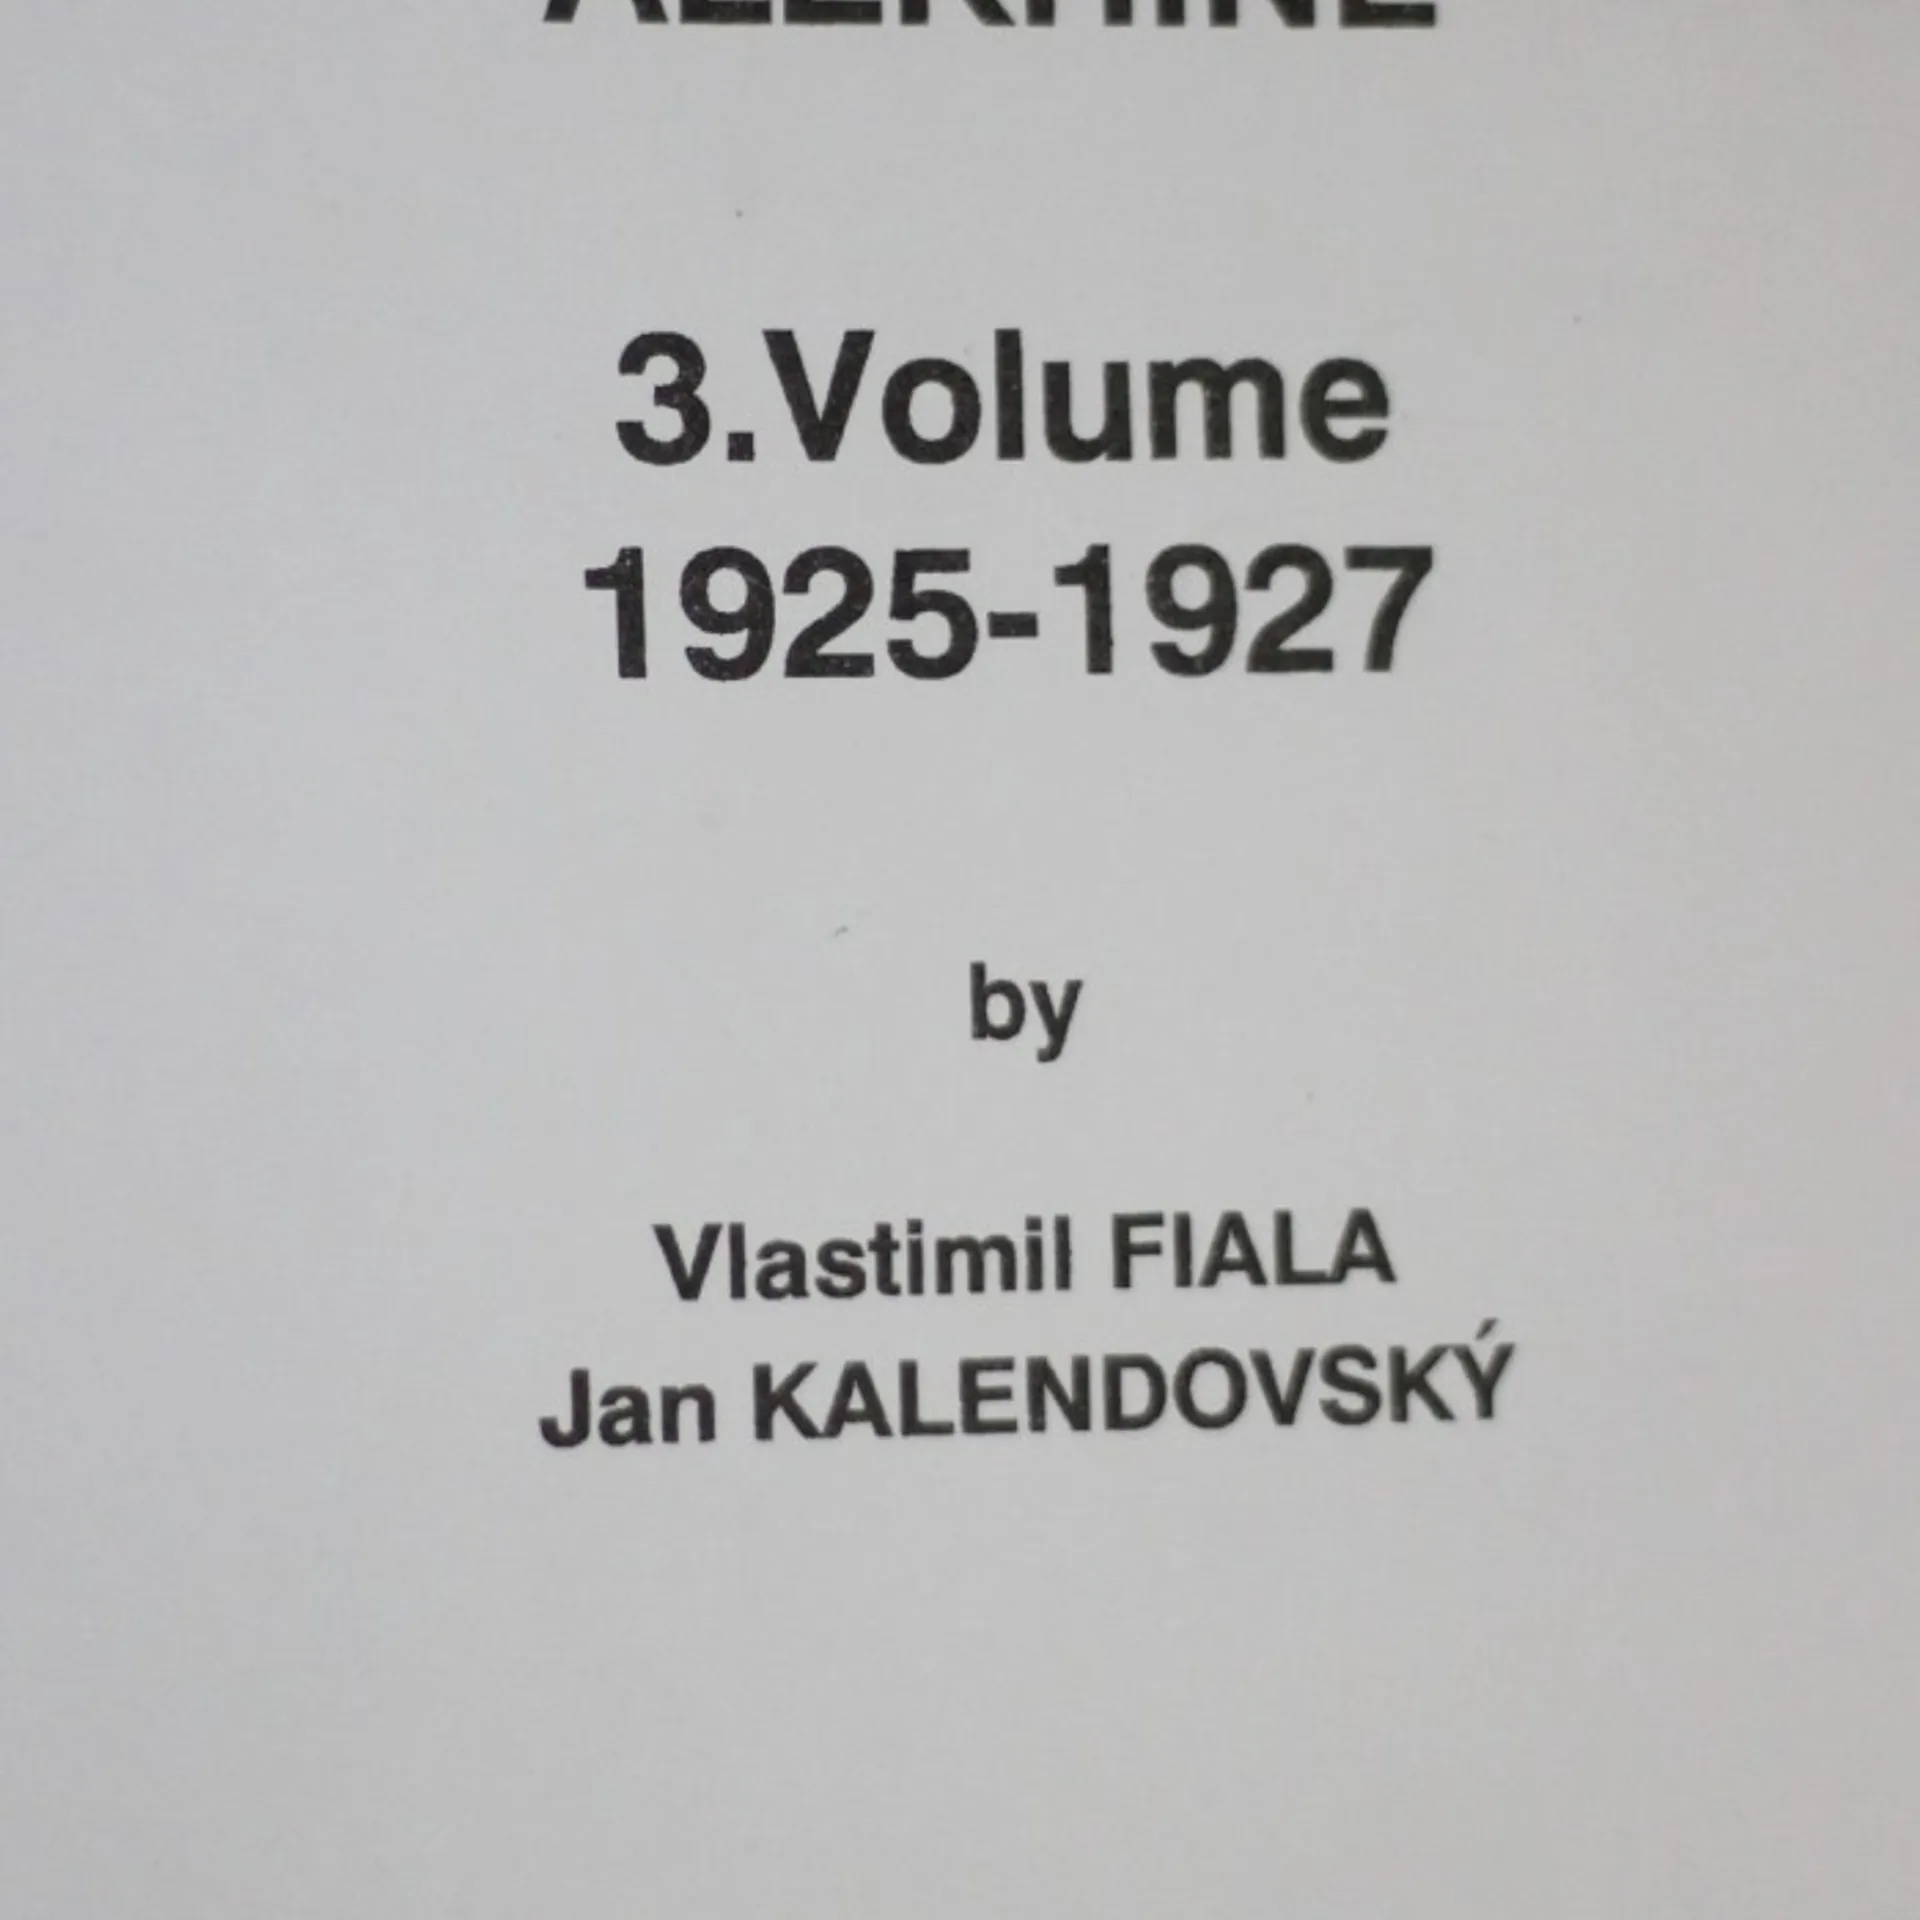 Complete Games of Alekhine Volume 3: 1925-1922 by Vlastimil Fiala